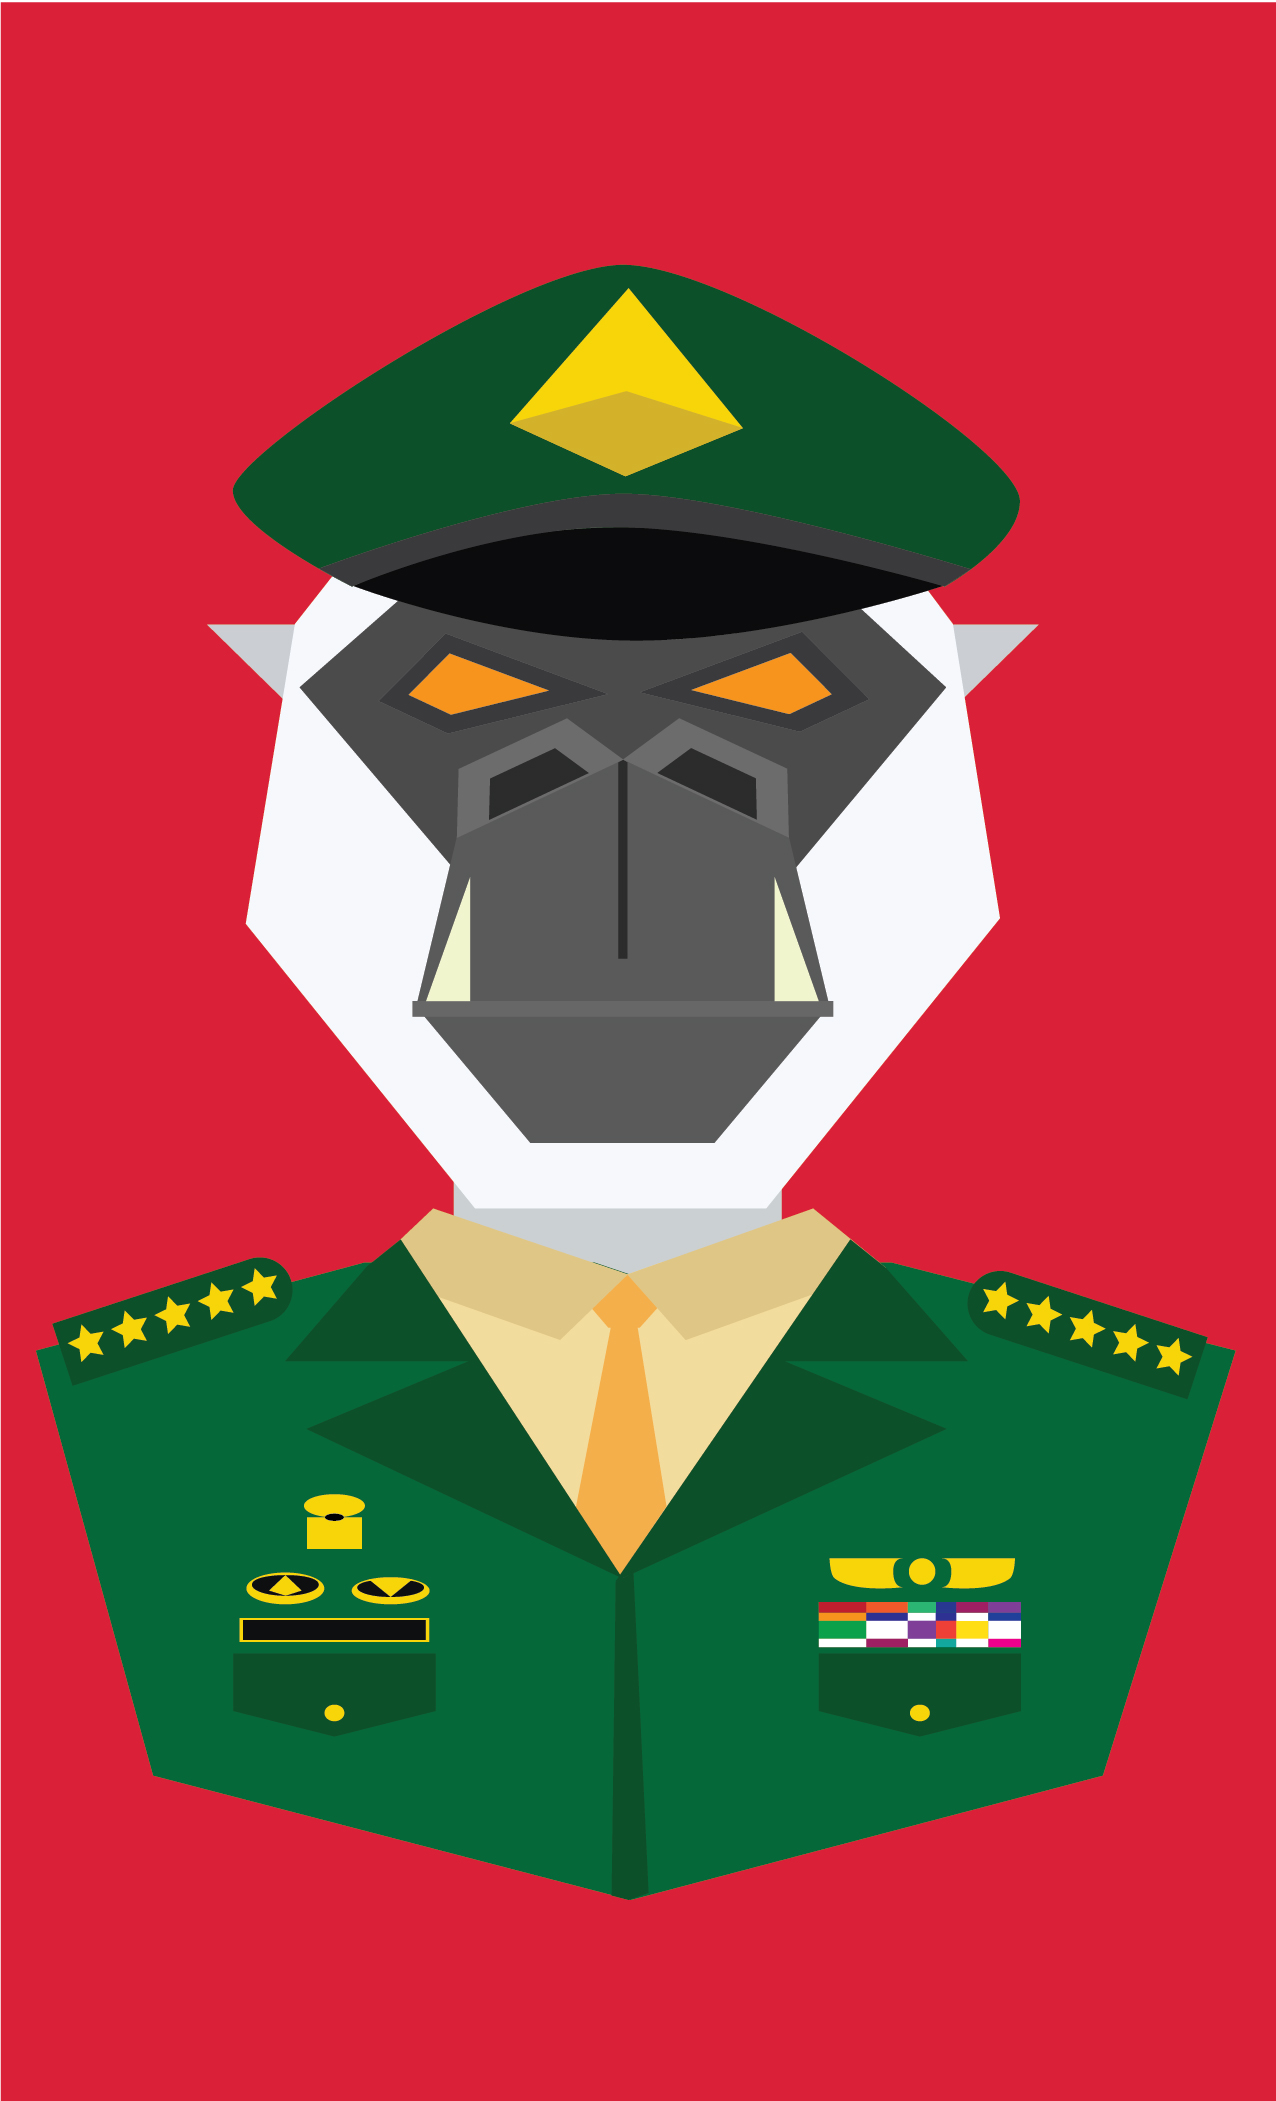 General W.Gorilla